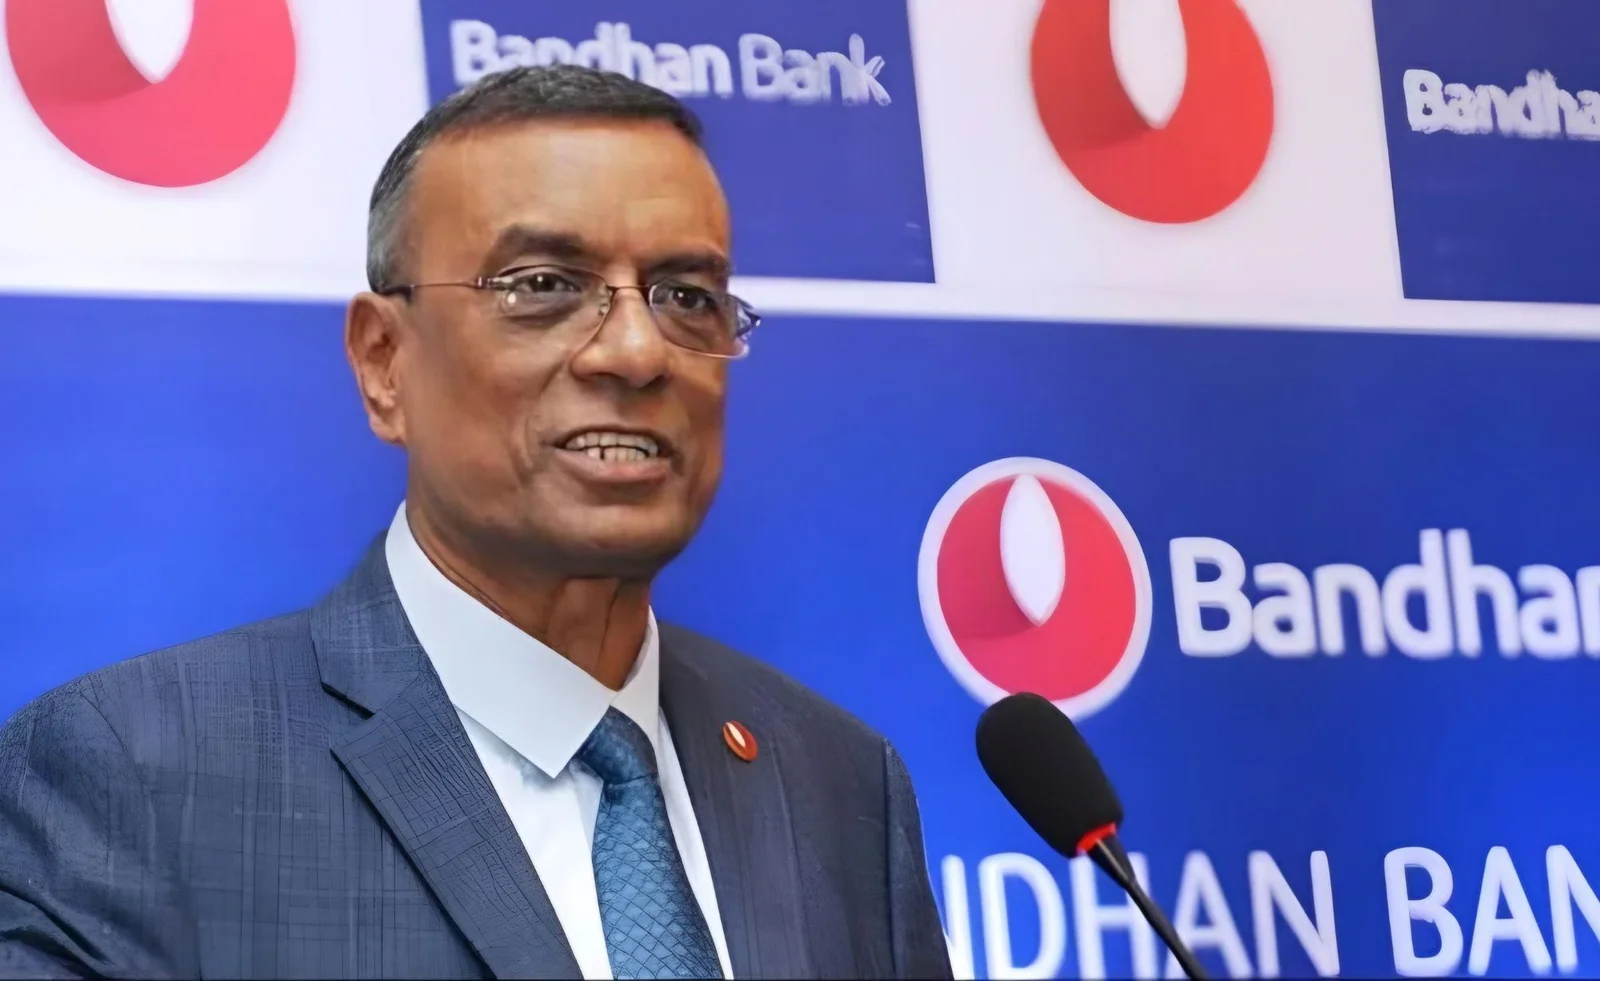 Bandhan Bank's Credit Card Launch